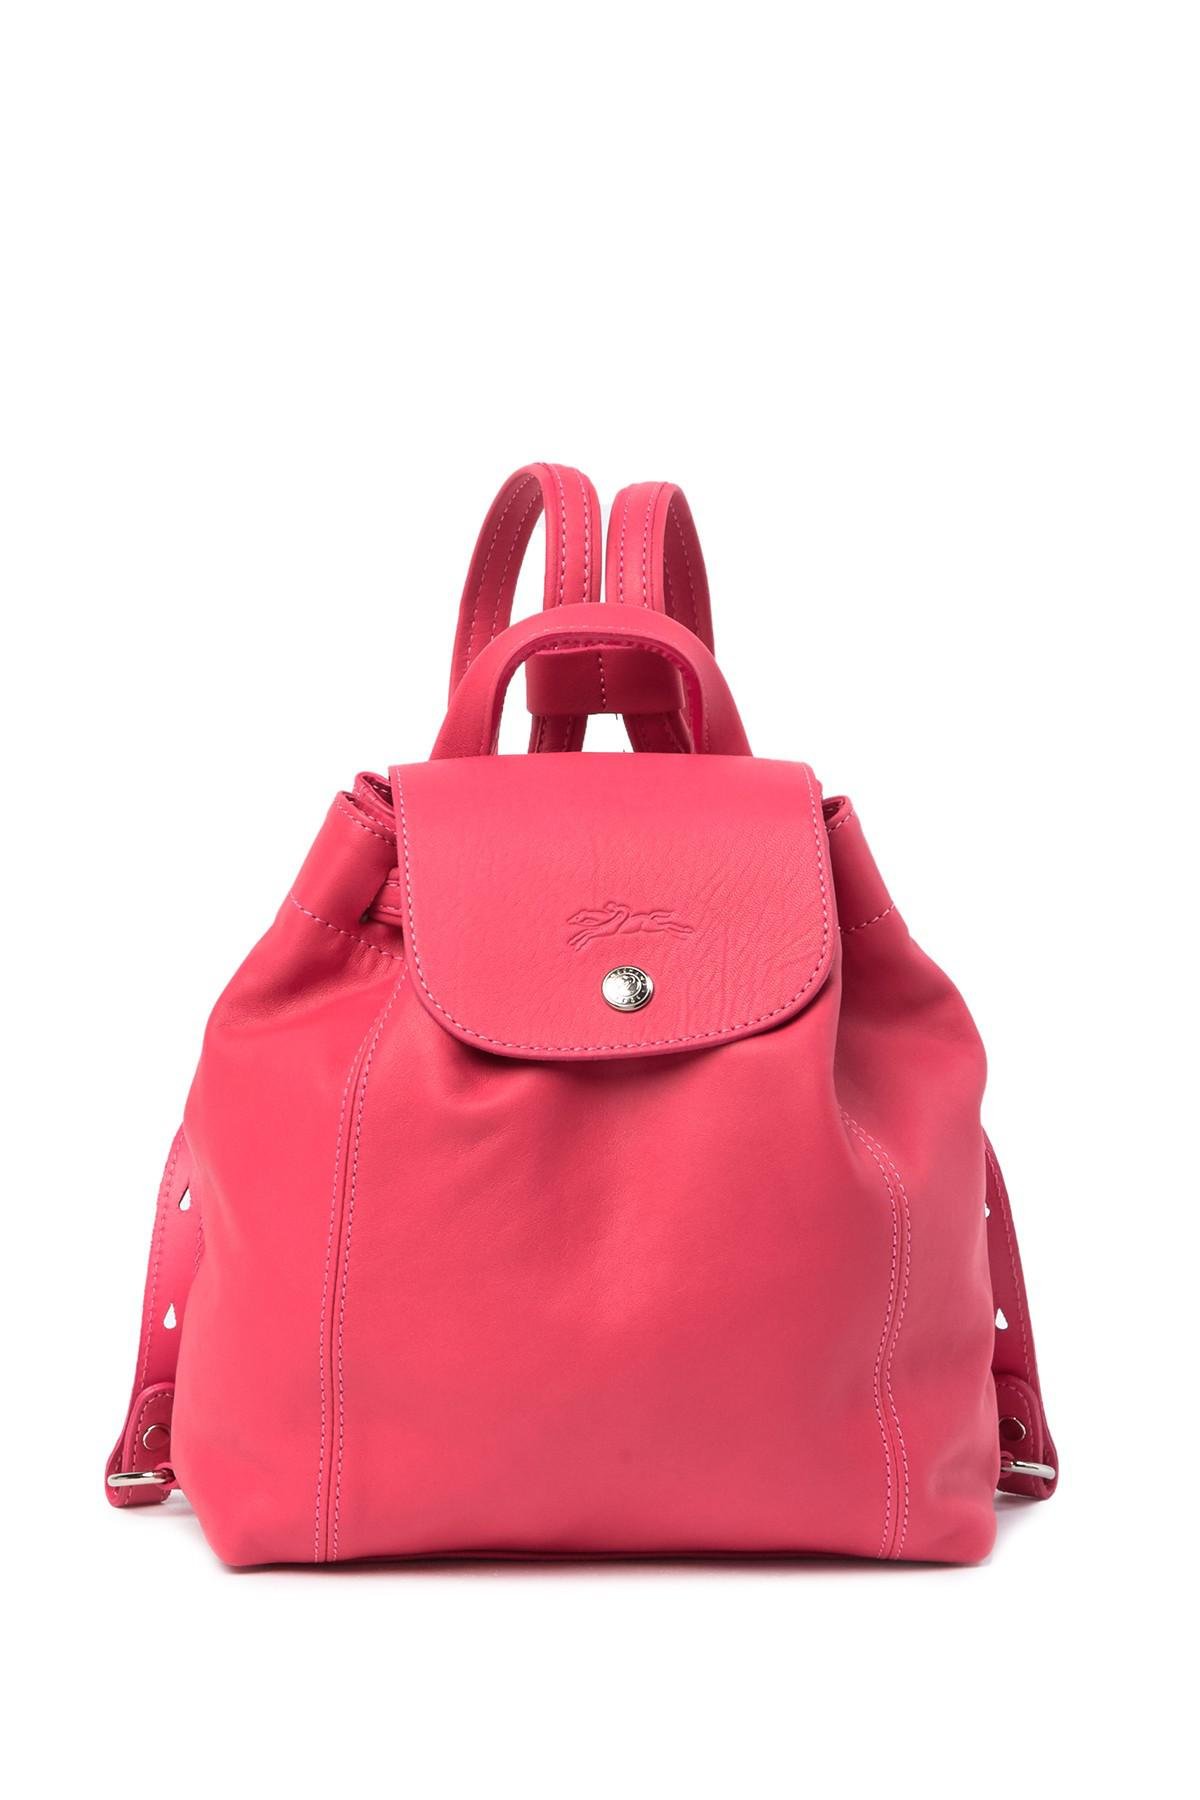 Longchamp Pink Leather Le Pliage Backpack Longchamp